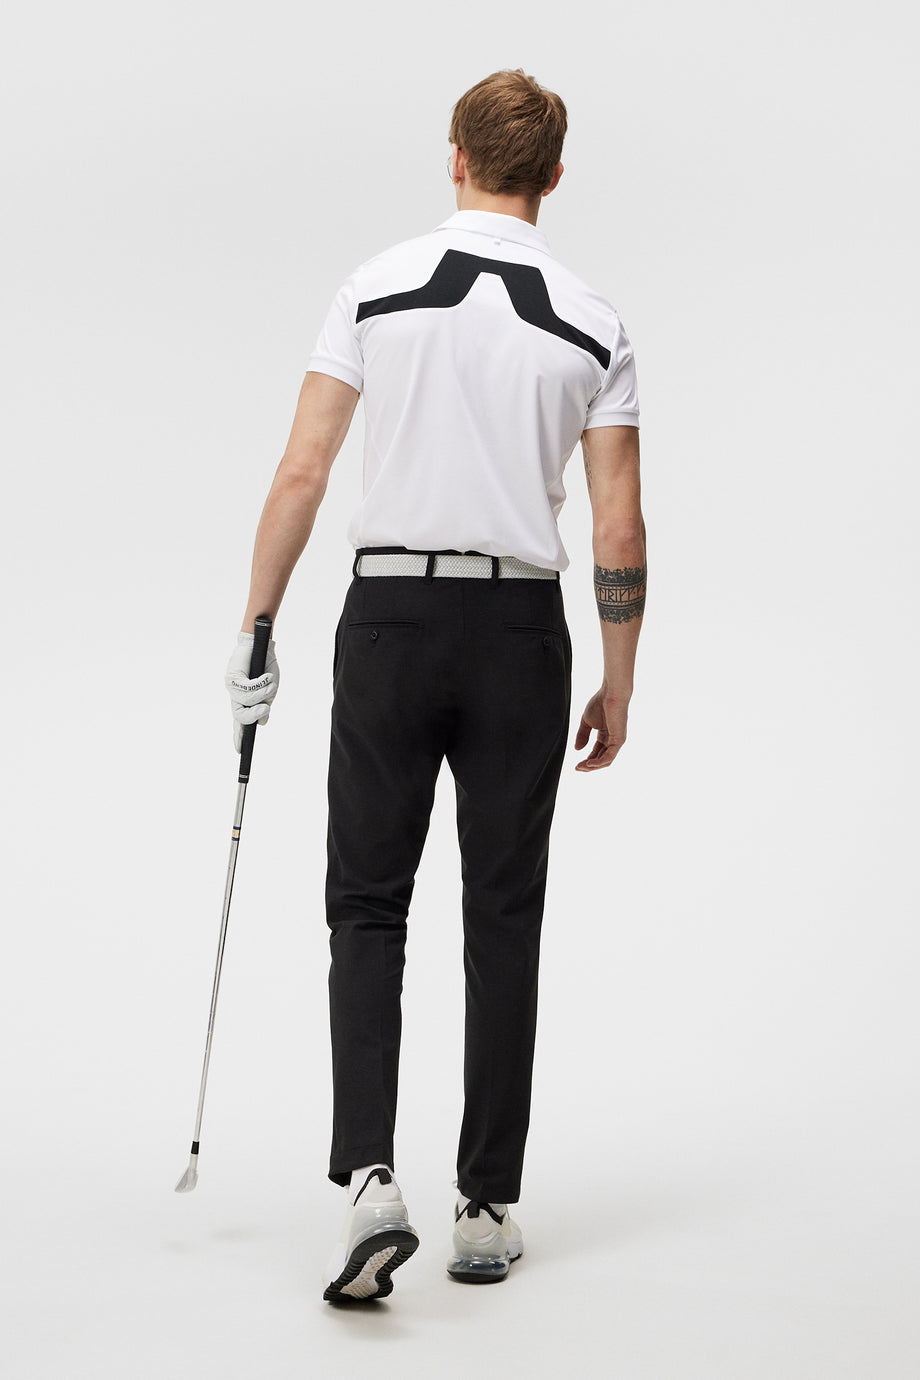 Ellott Golf Pant / Black